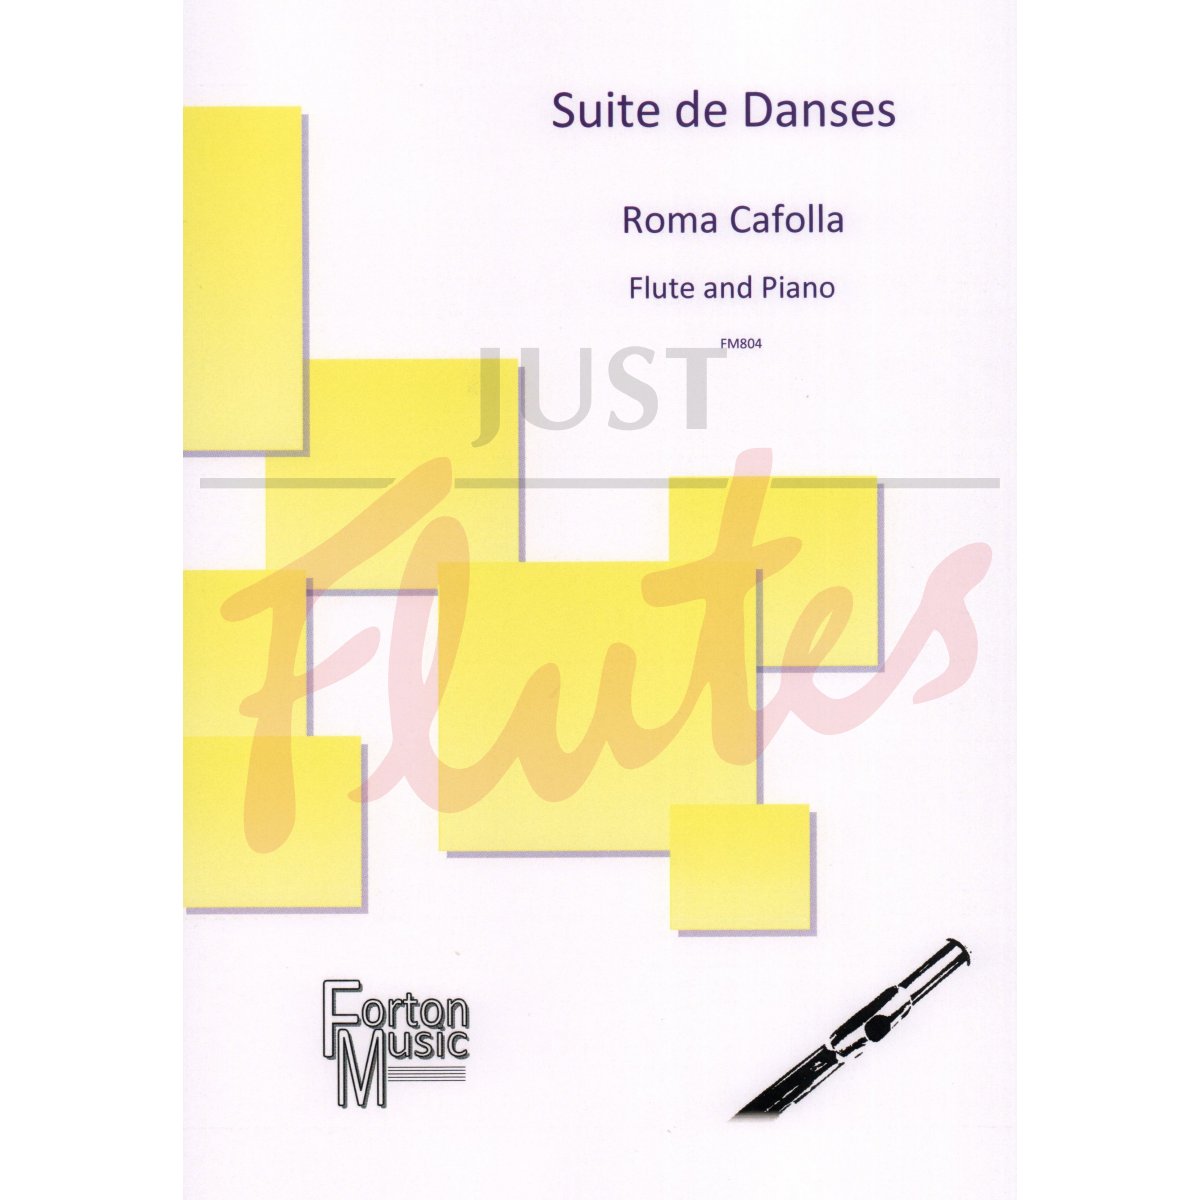 Suite de Danses for Flute and Piano